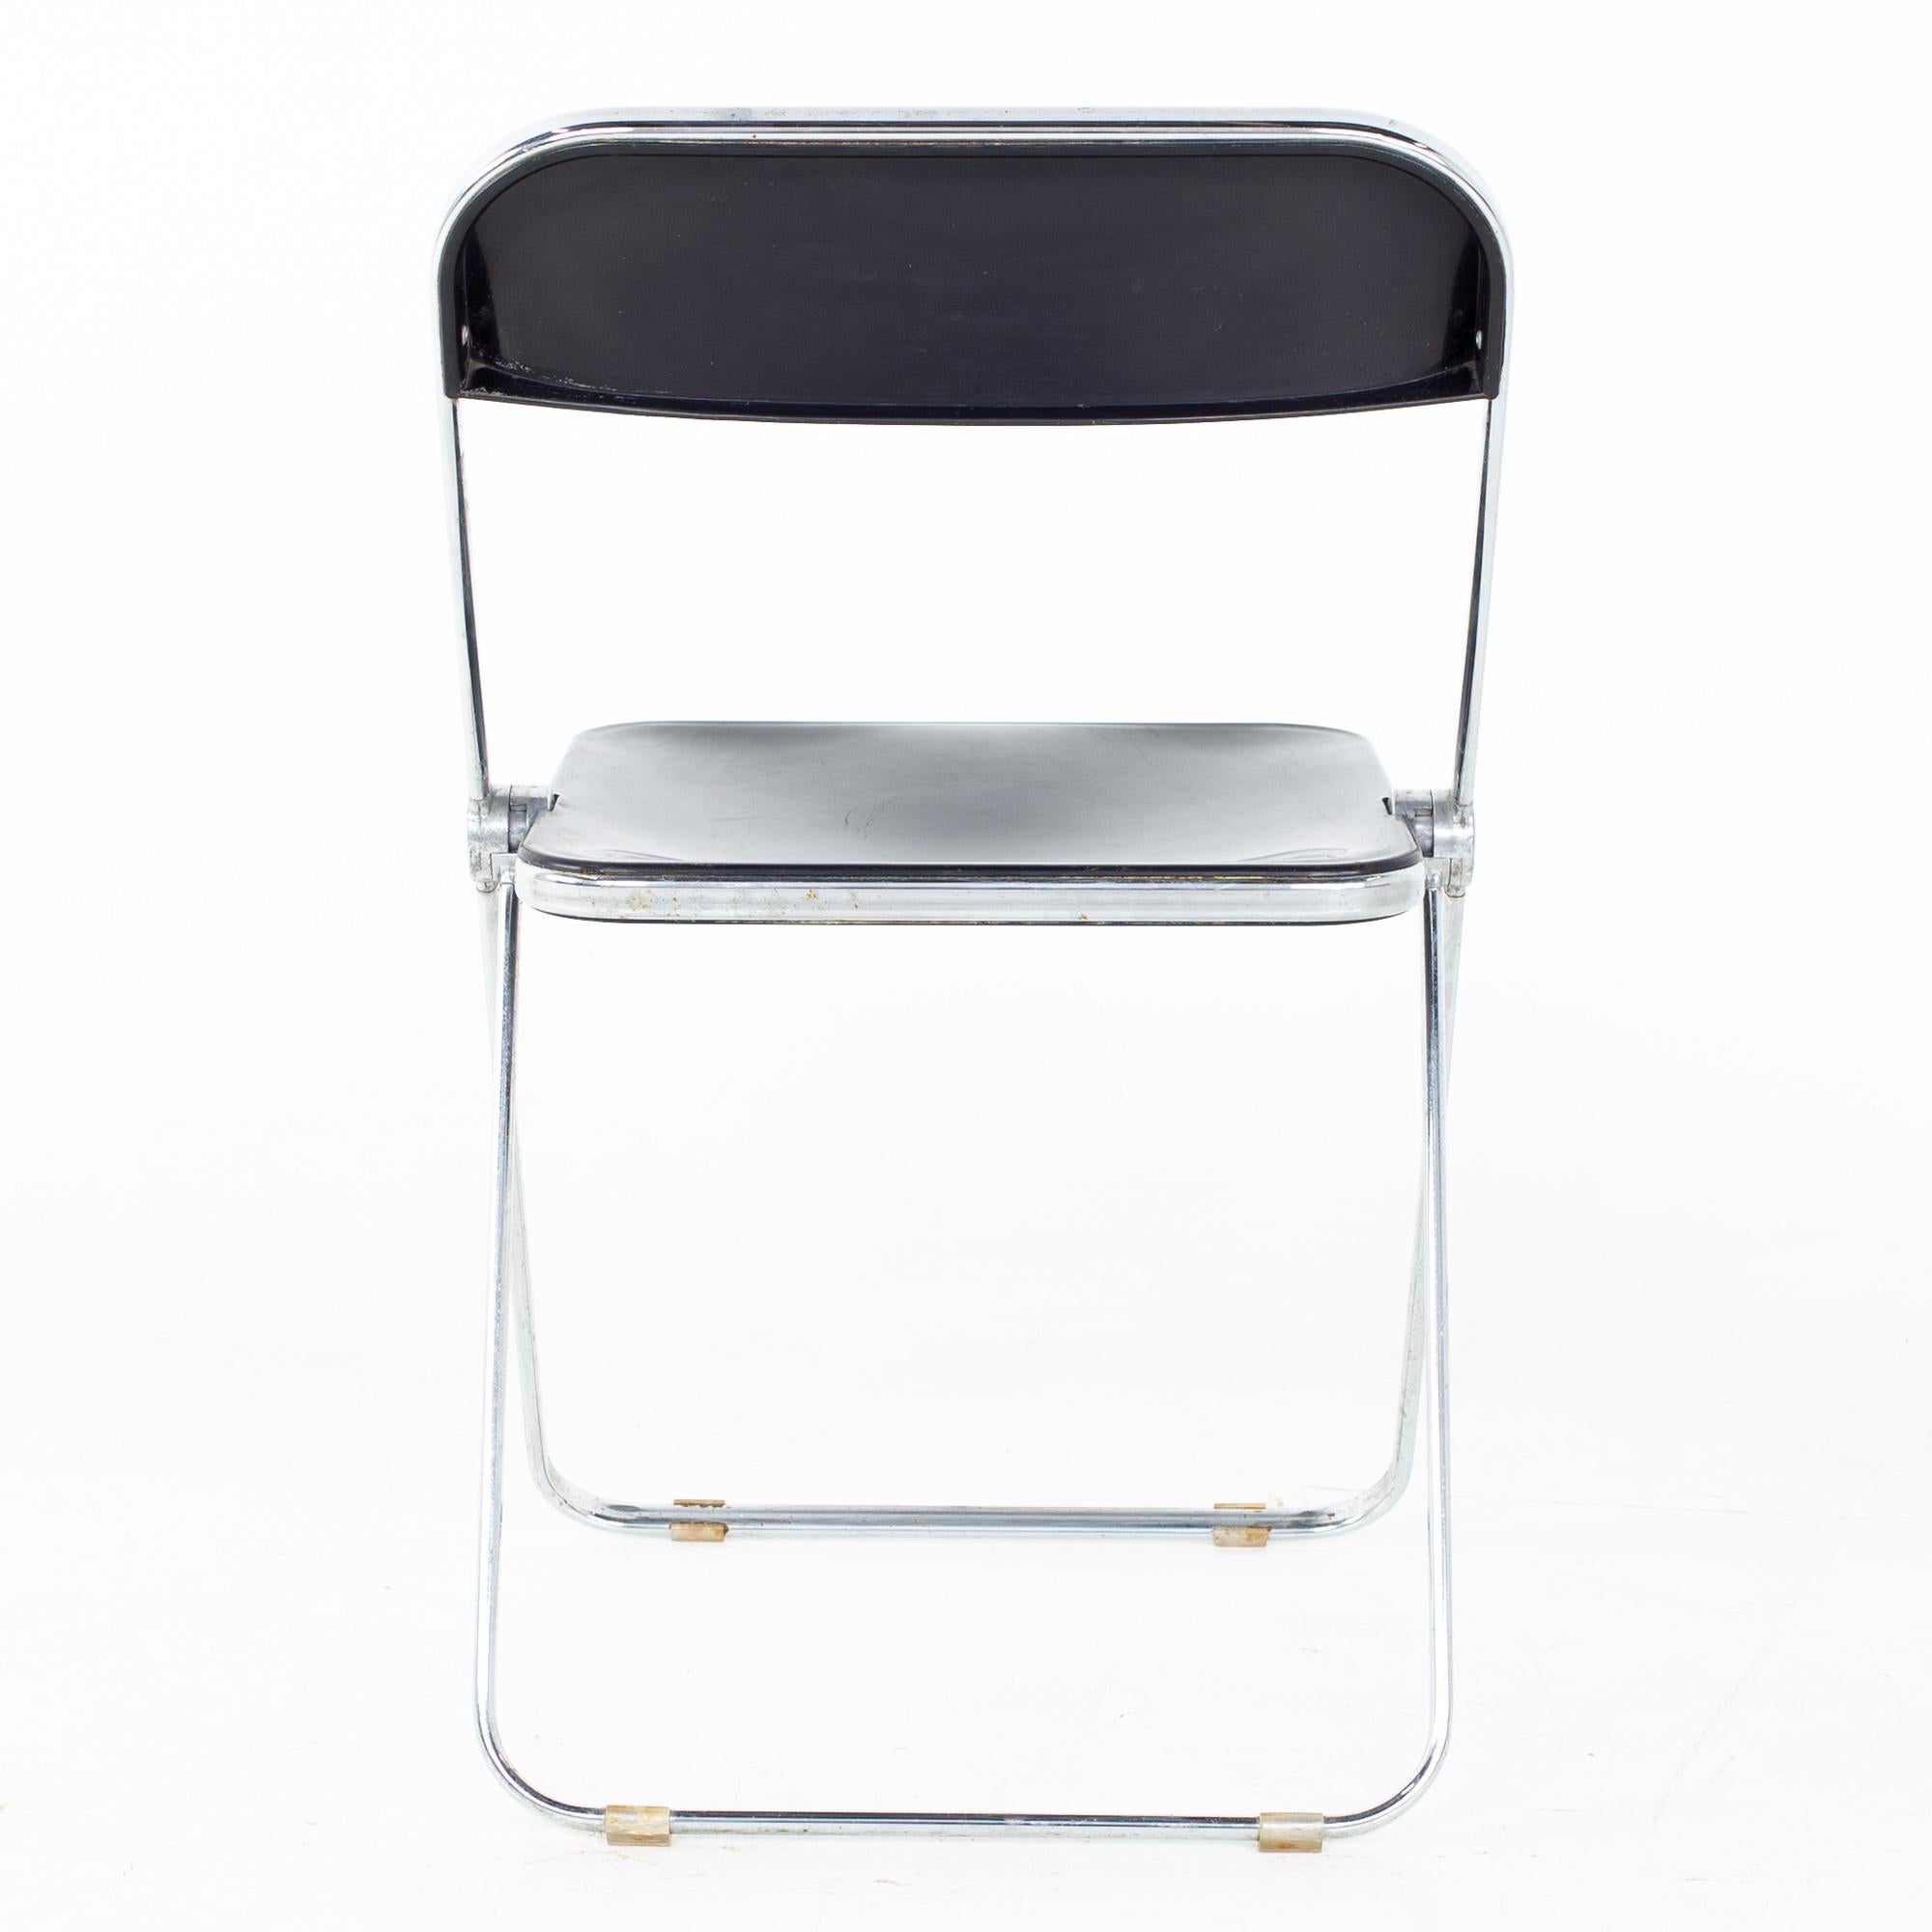 Giancarlo Piretti Anonima Castelli Style MCM Smoked Lucite Folding Chair Set 3 For Sale 2